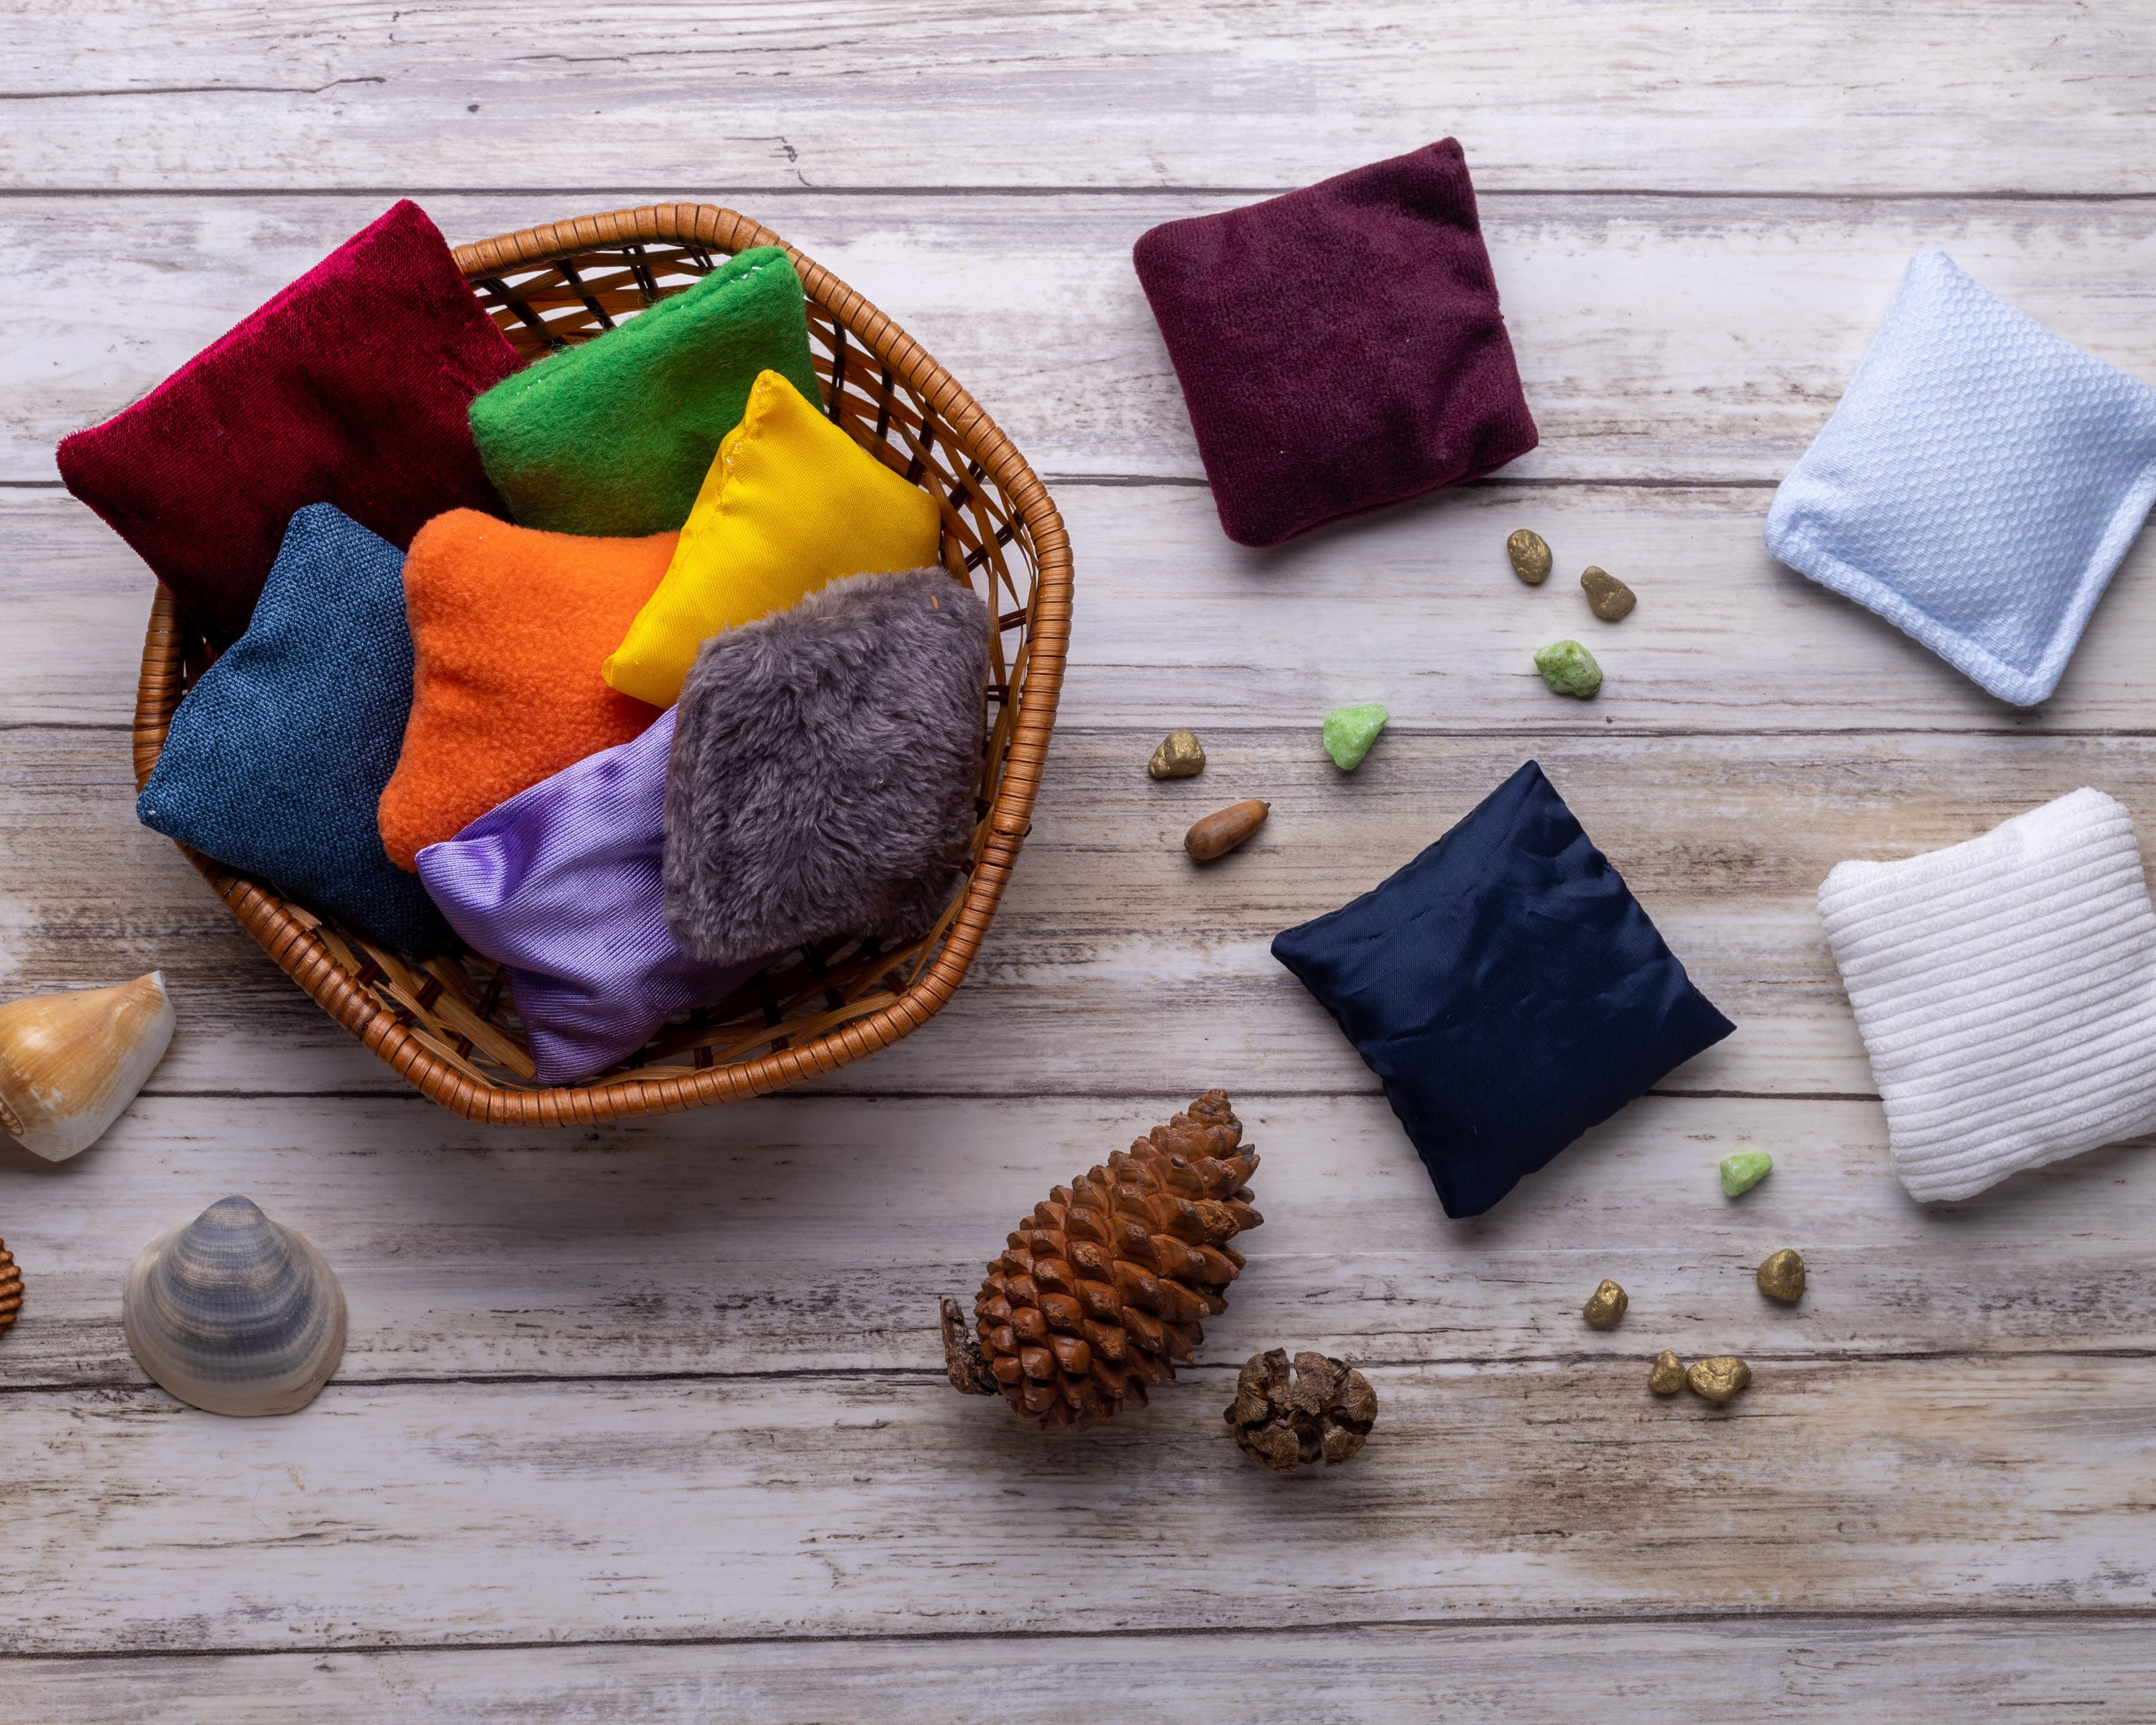 Shredded Memory Foam Fill for Bean Bags, Foam Sacks, Pillows, Poufs, Craft,  Dolls, DIY Projects, Bean Bag Filling 